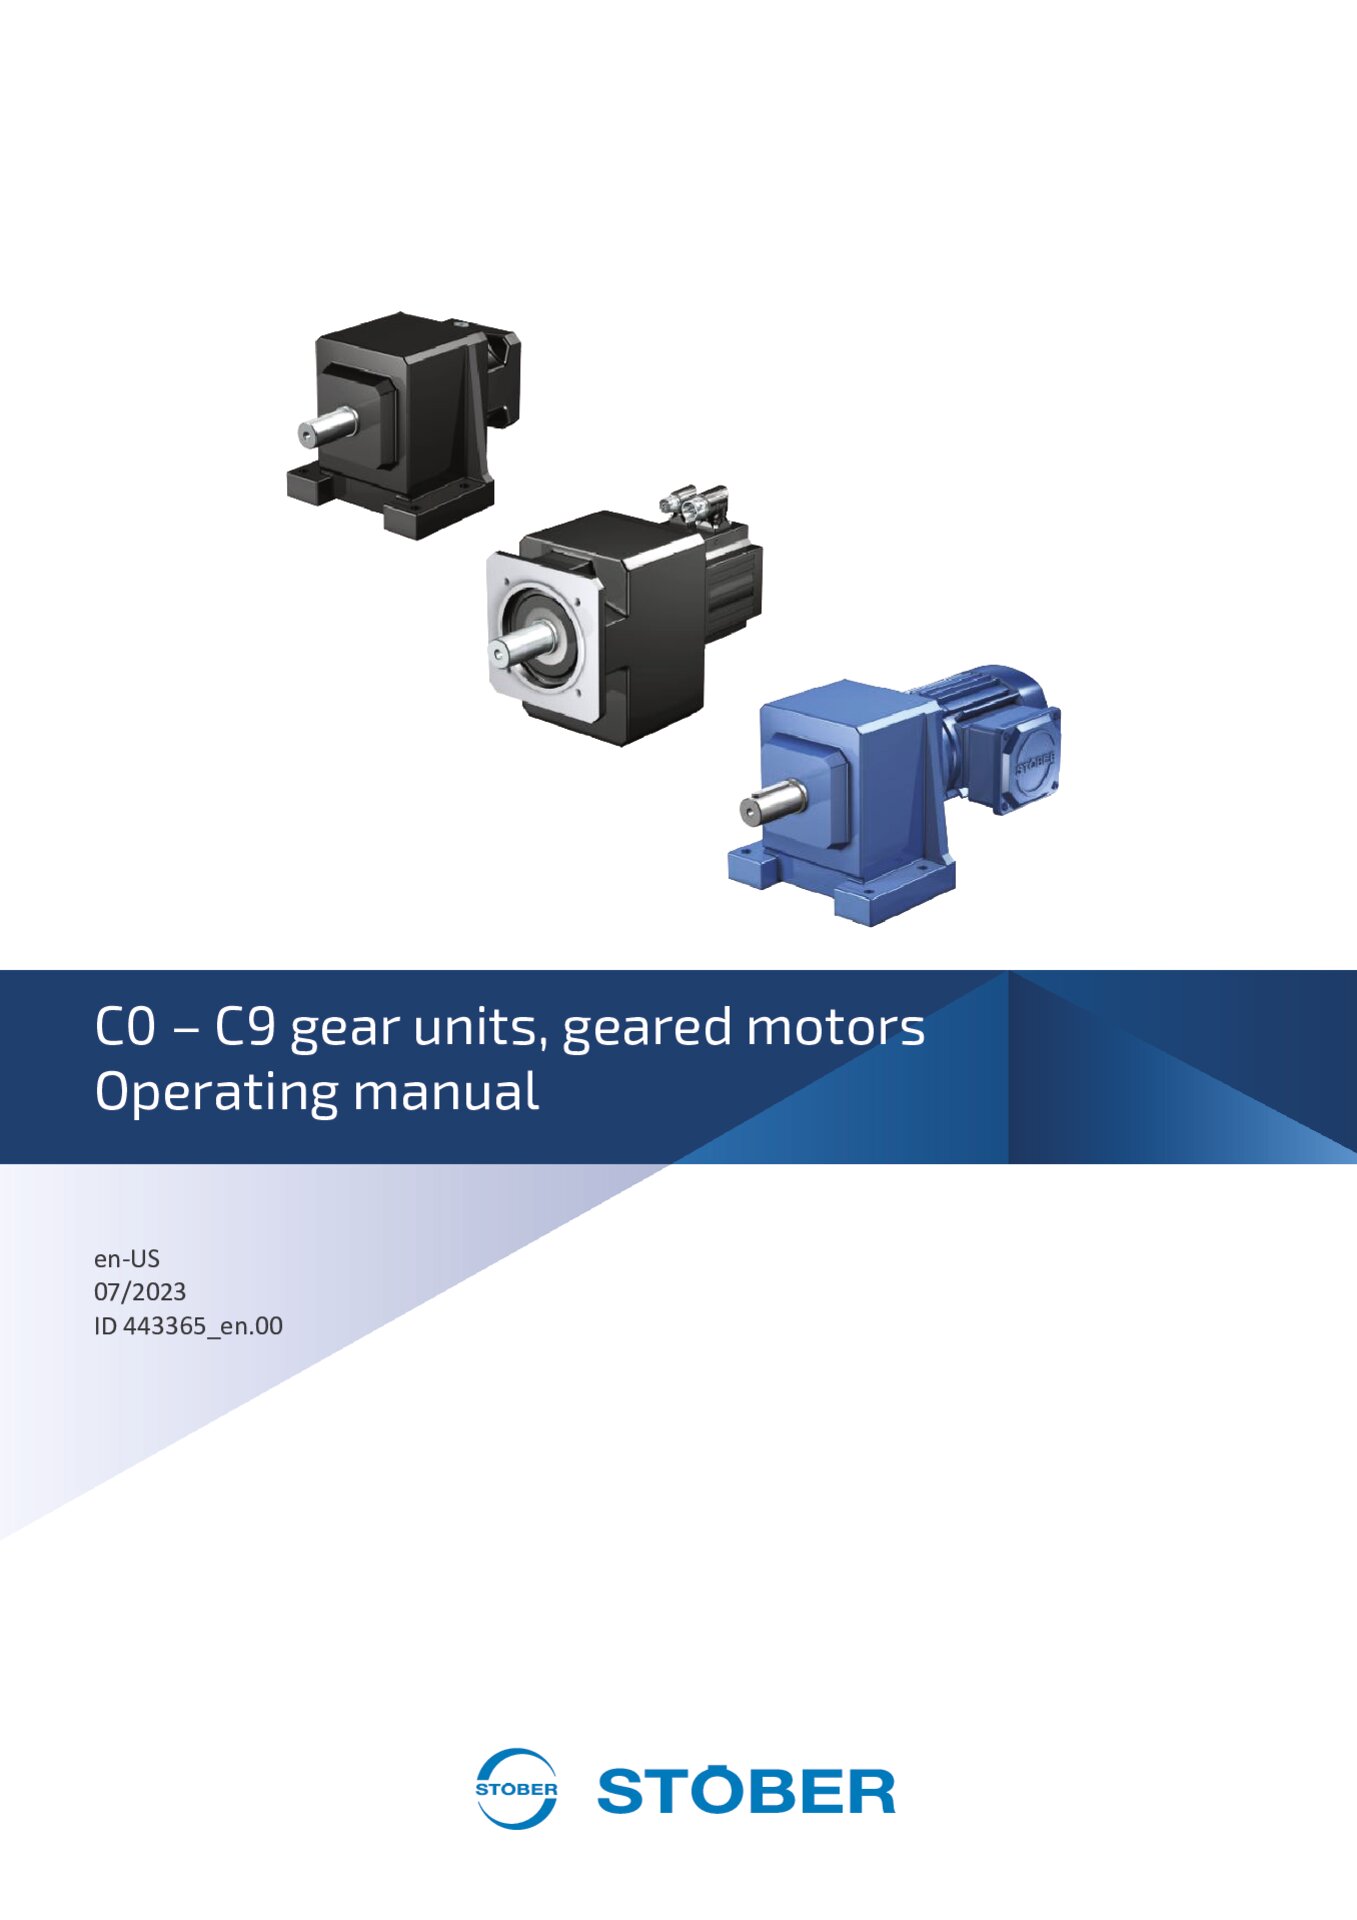 Operating manual C0 - C9 gear units and geared motors